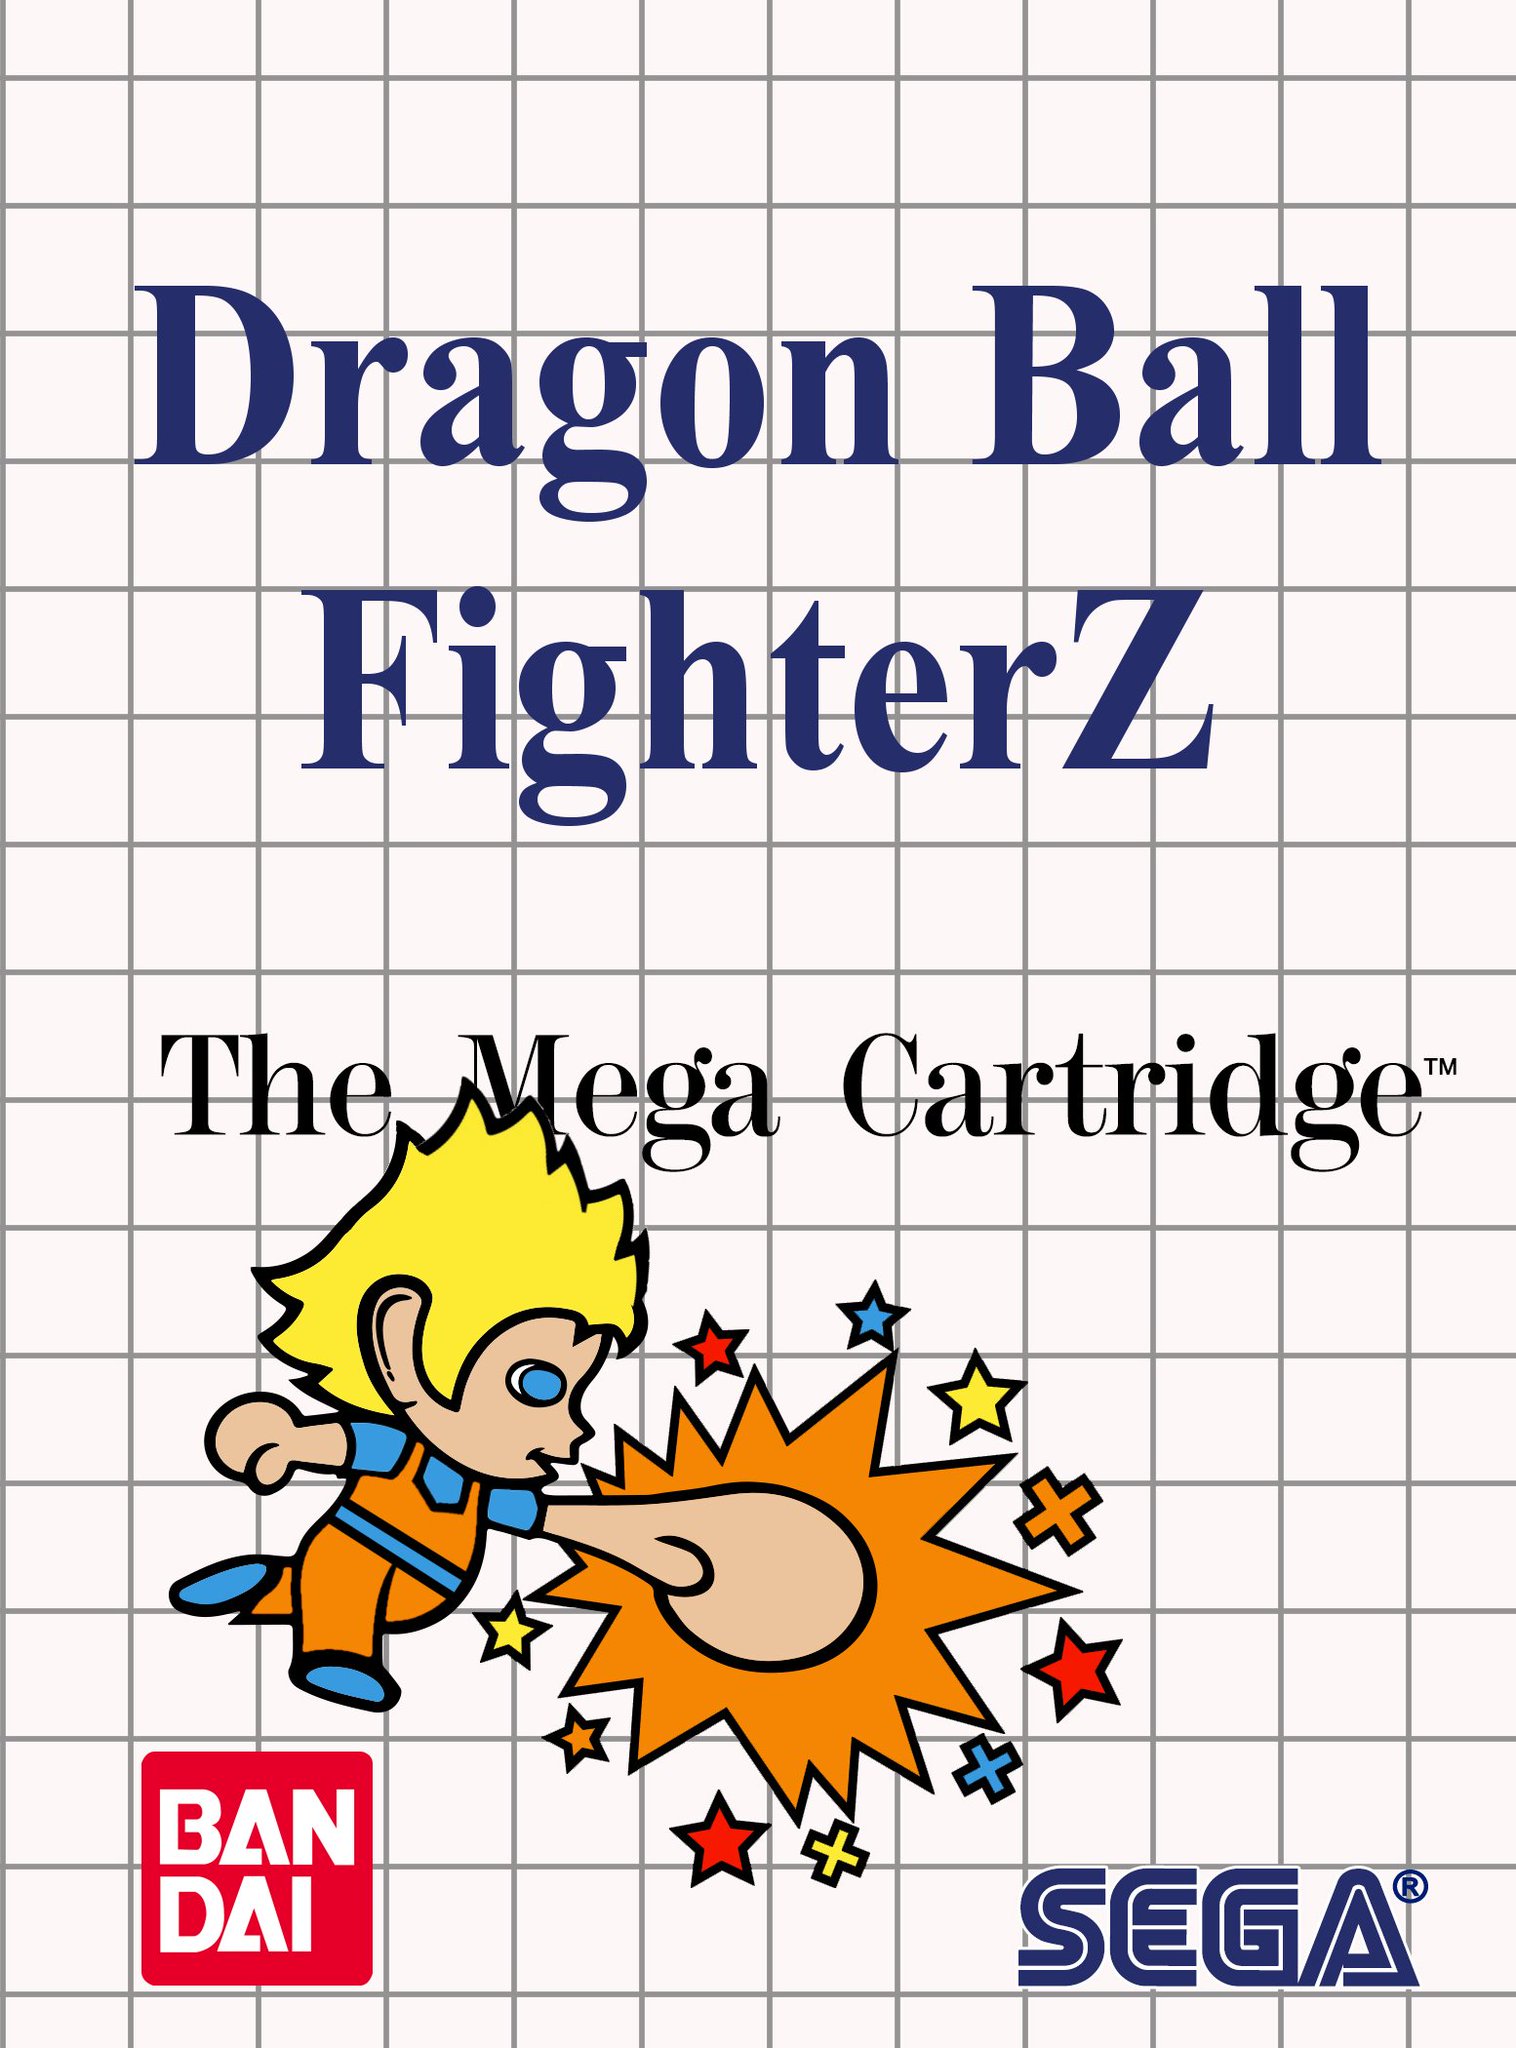 ps4 - [MULTI] Dragon Ball Fighter Z DM57L_kW0AAh0fX